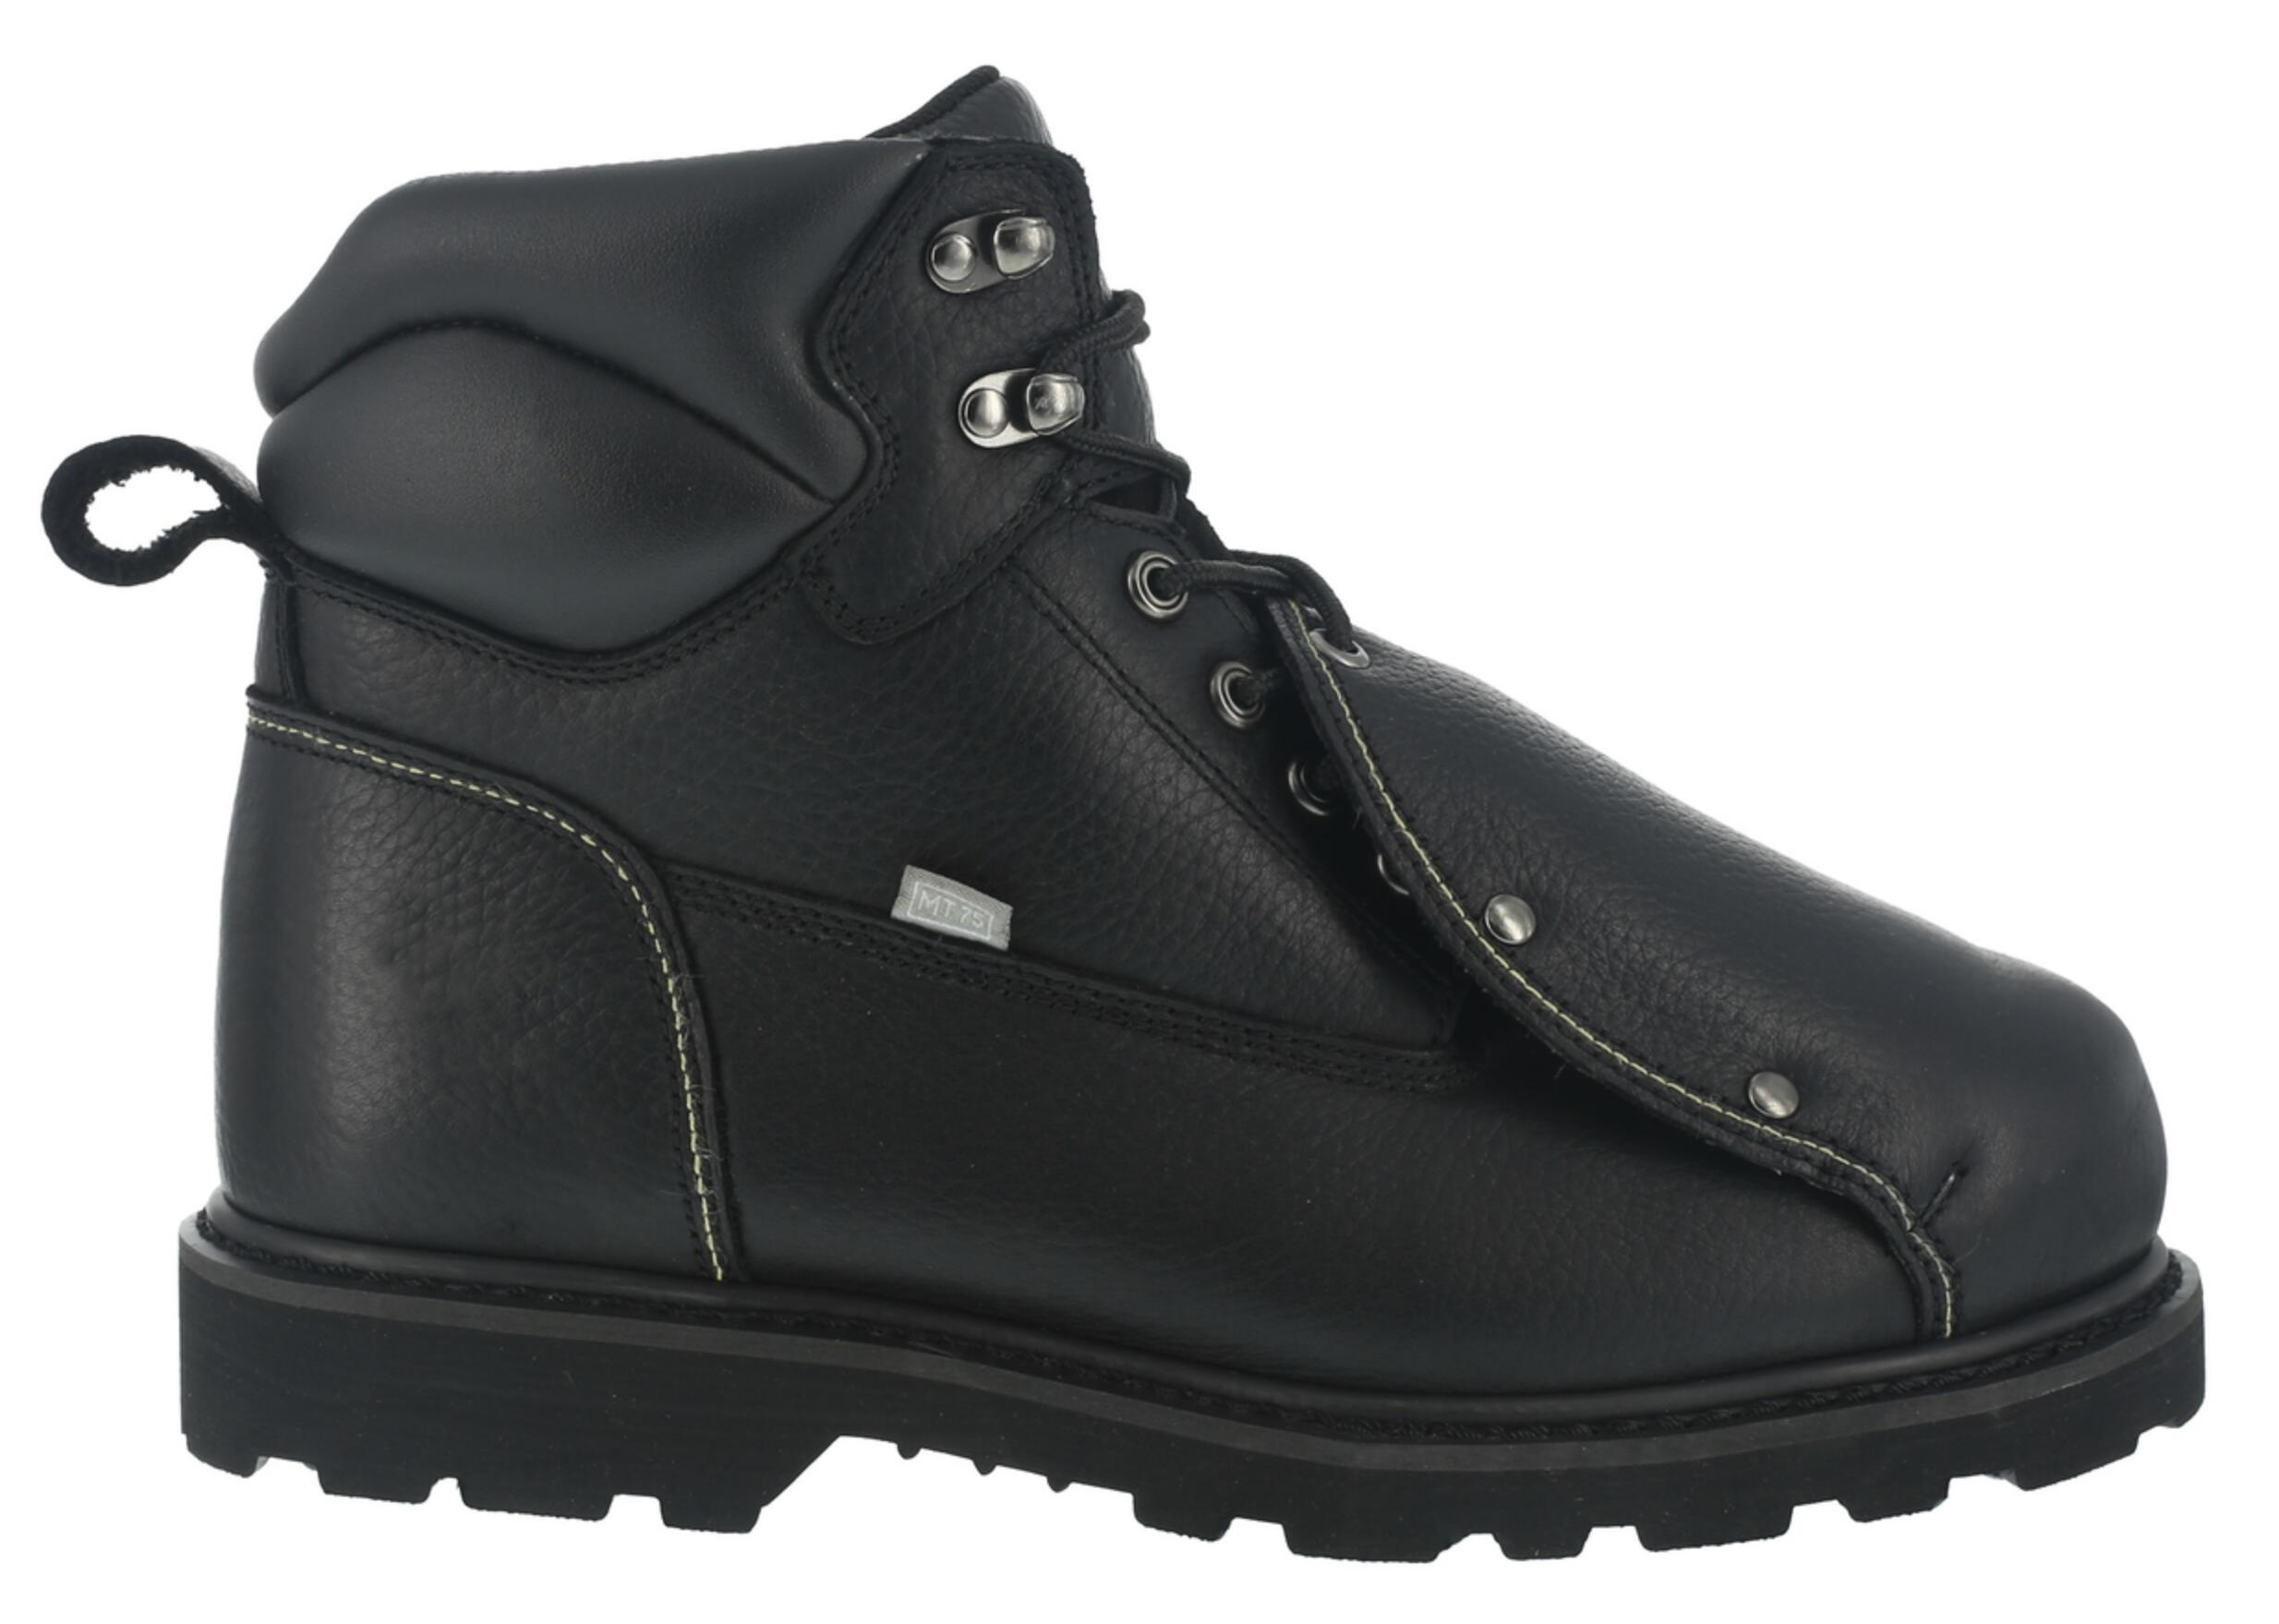 6 IN. Black Groundbreaker Steel toe Vibram sole Work Boot with External Met Guard